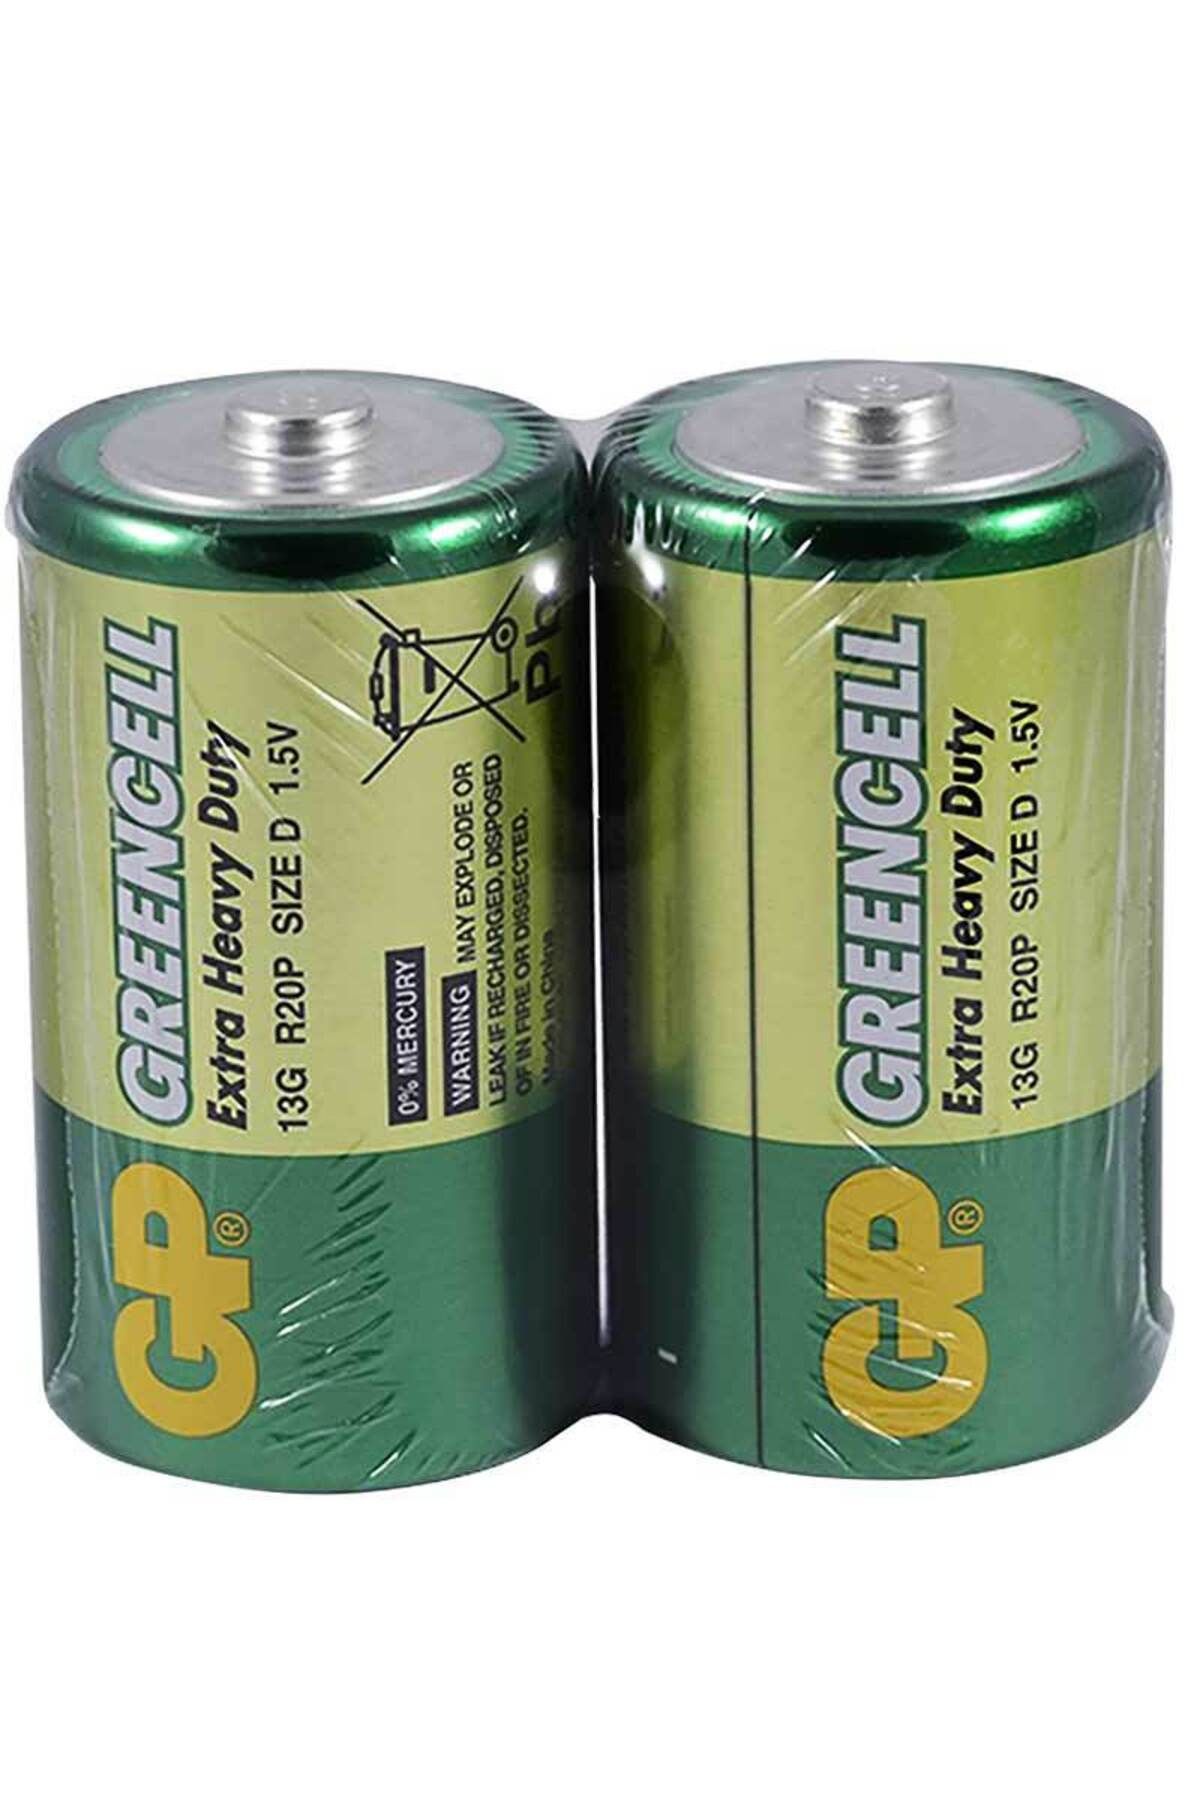 Lisinya Gp 13g 2s2 Greencell R20 Büyük D Boy Pil (20 Li Paket) (4172)